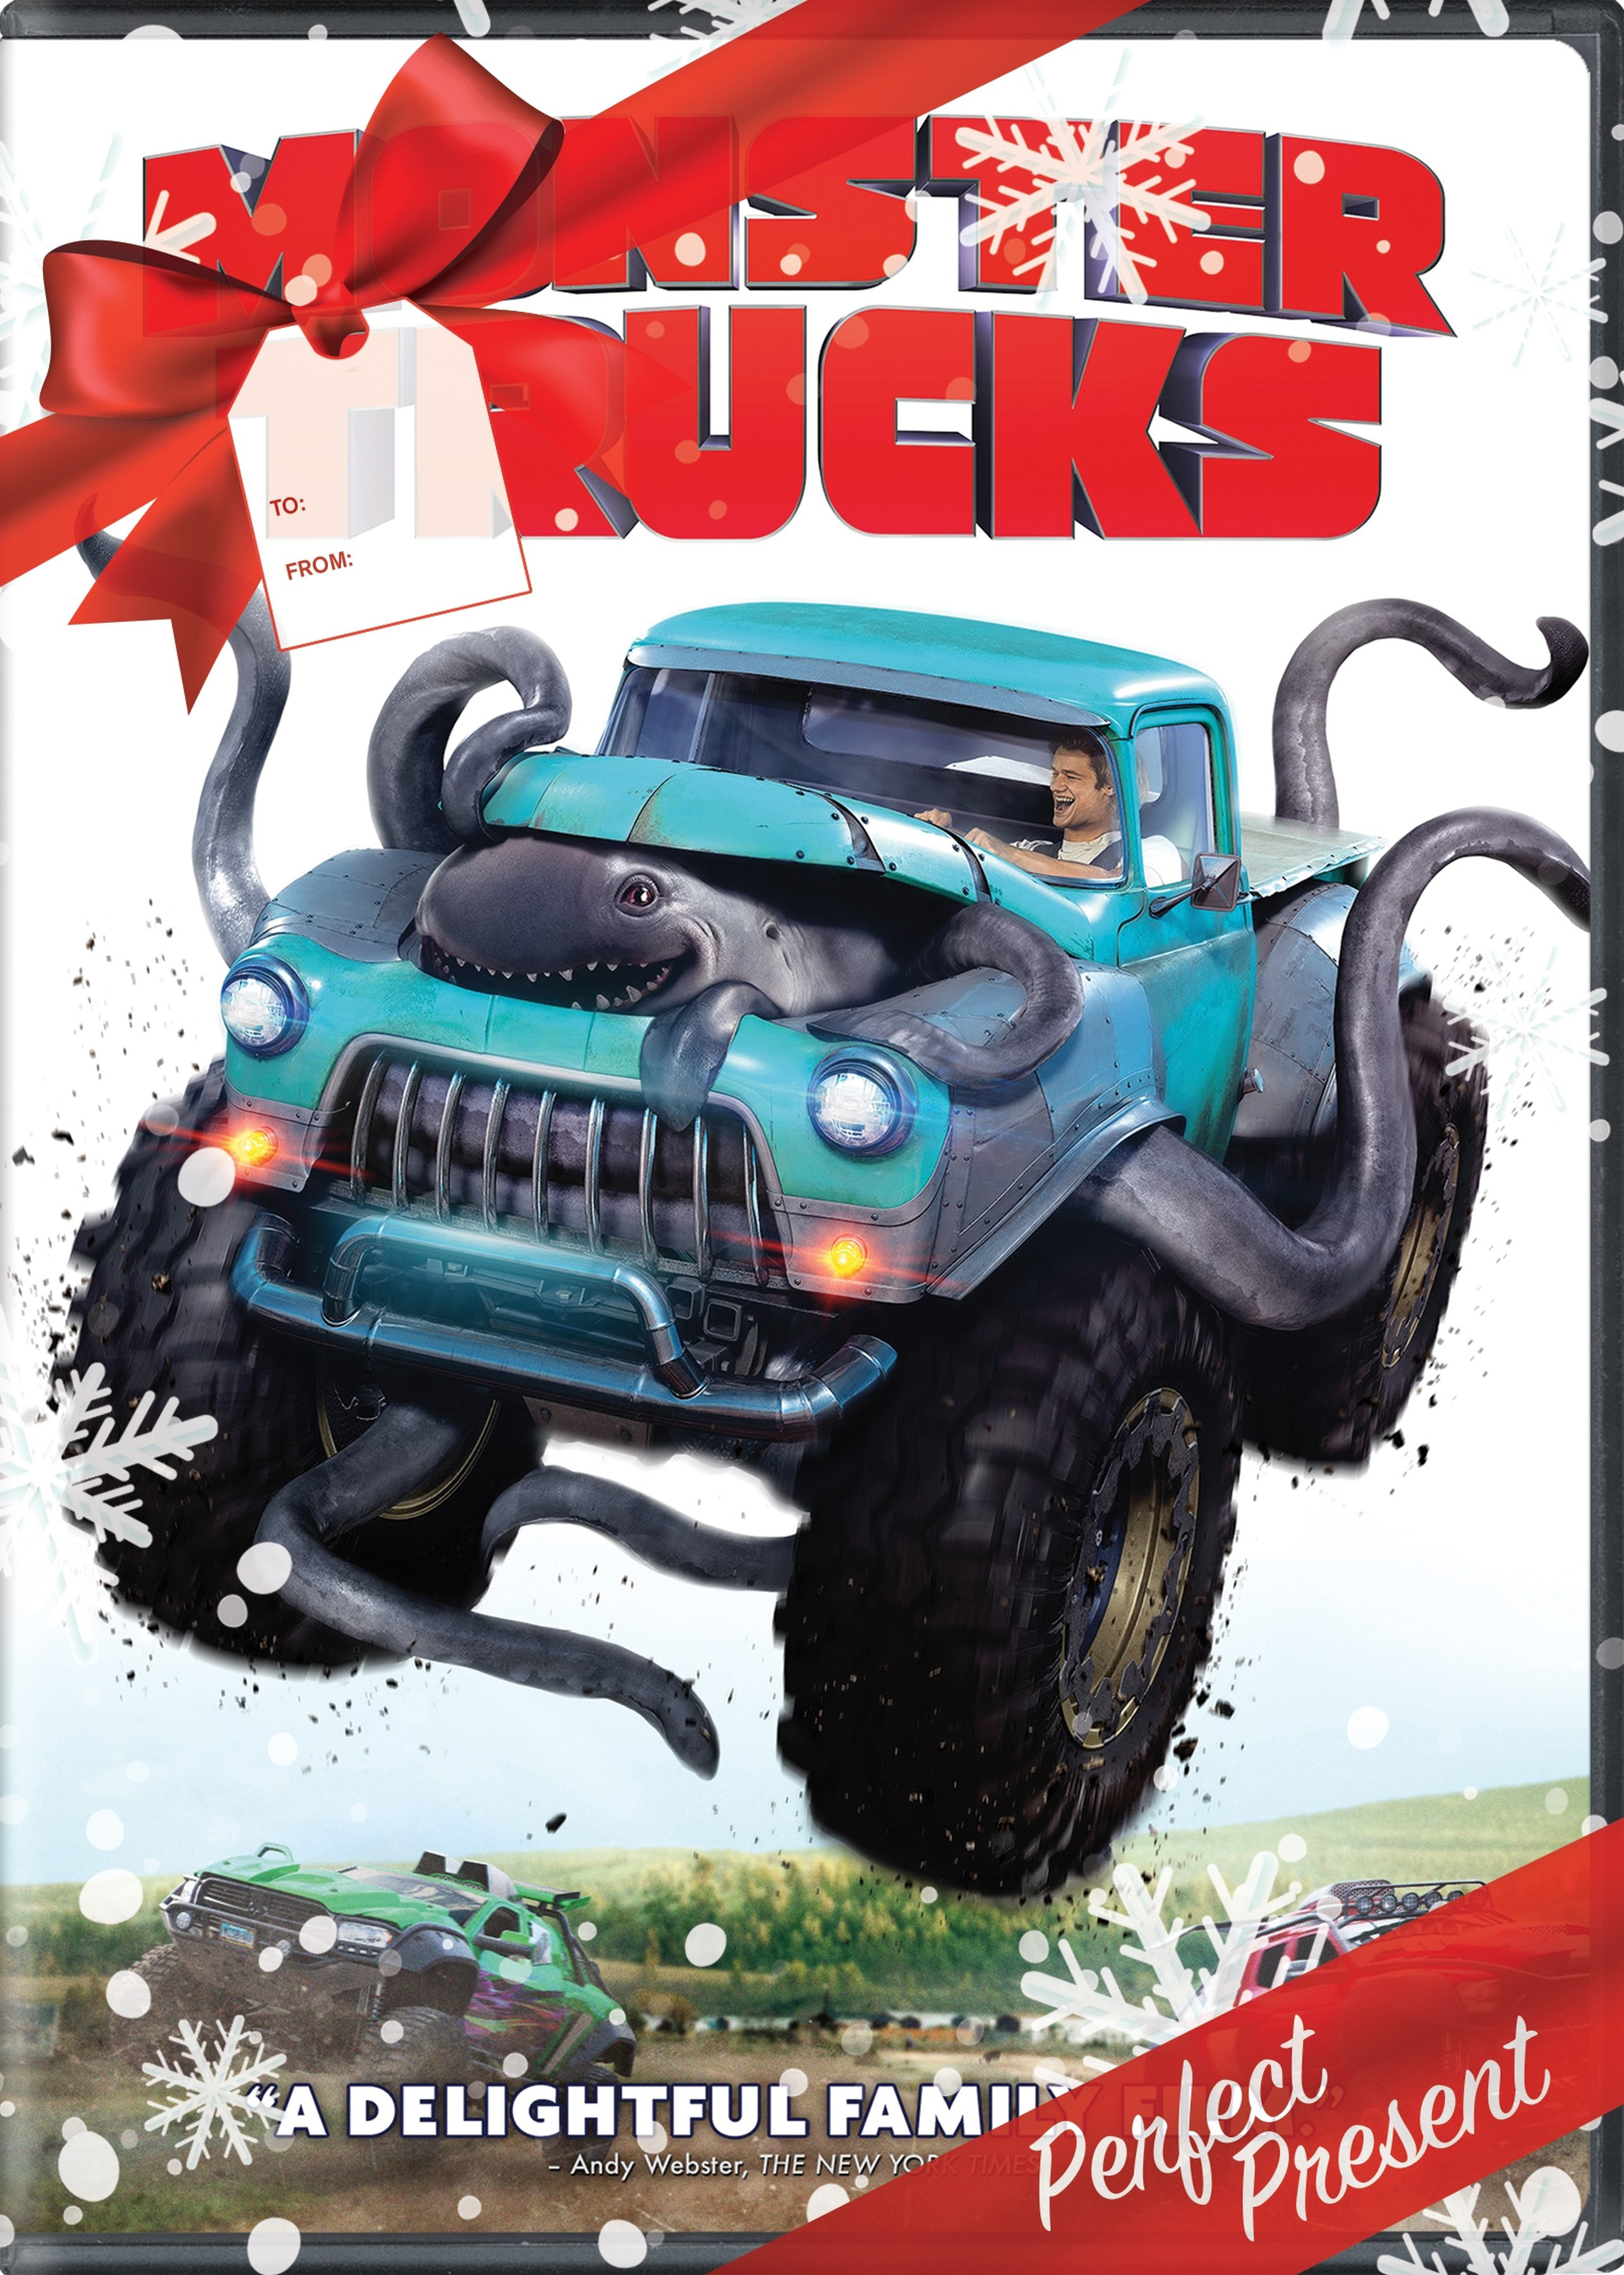 Monster Trucks Cinemark Limited Edition 11x17 Inch Movie -  Denmark